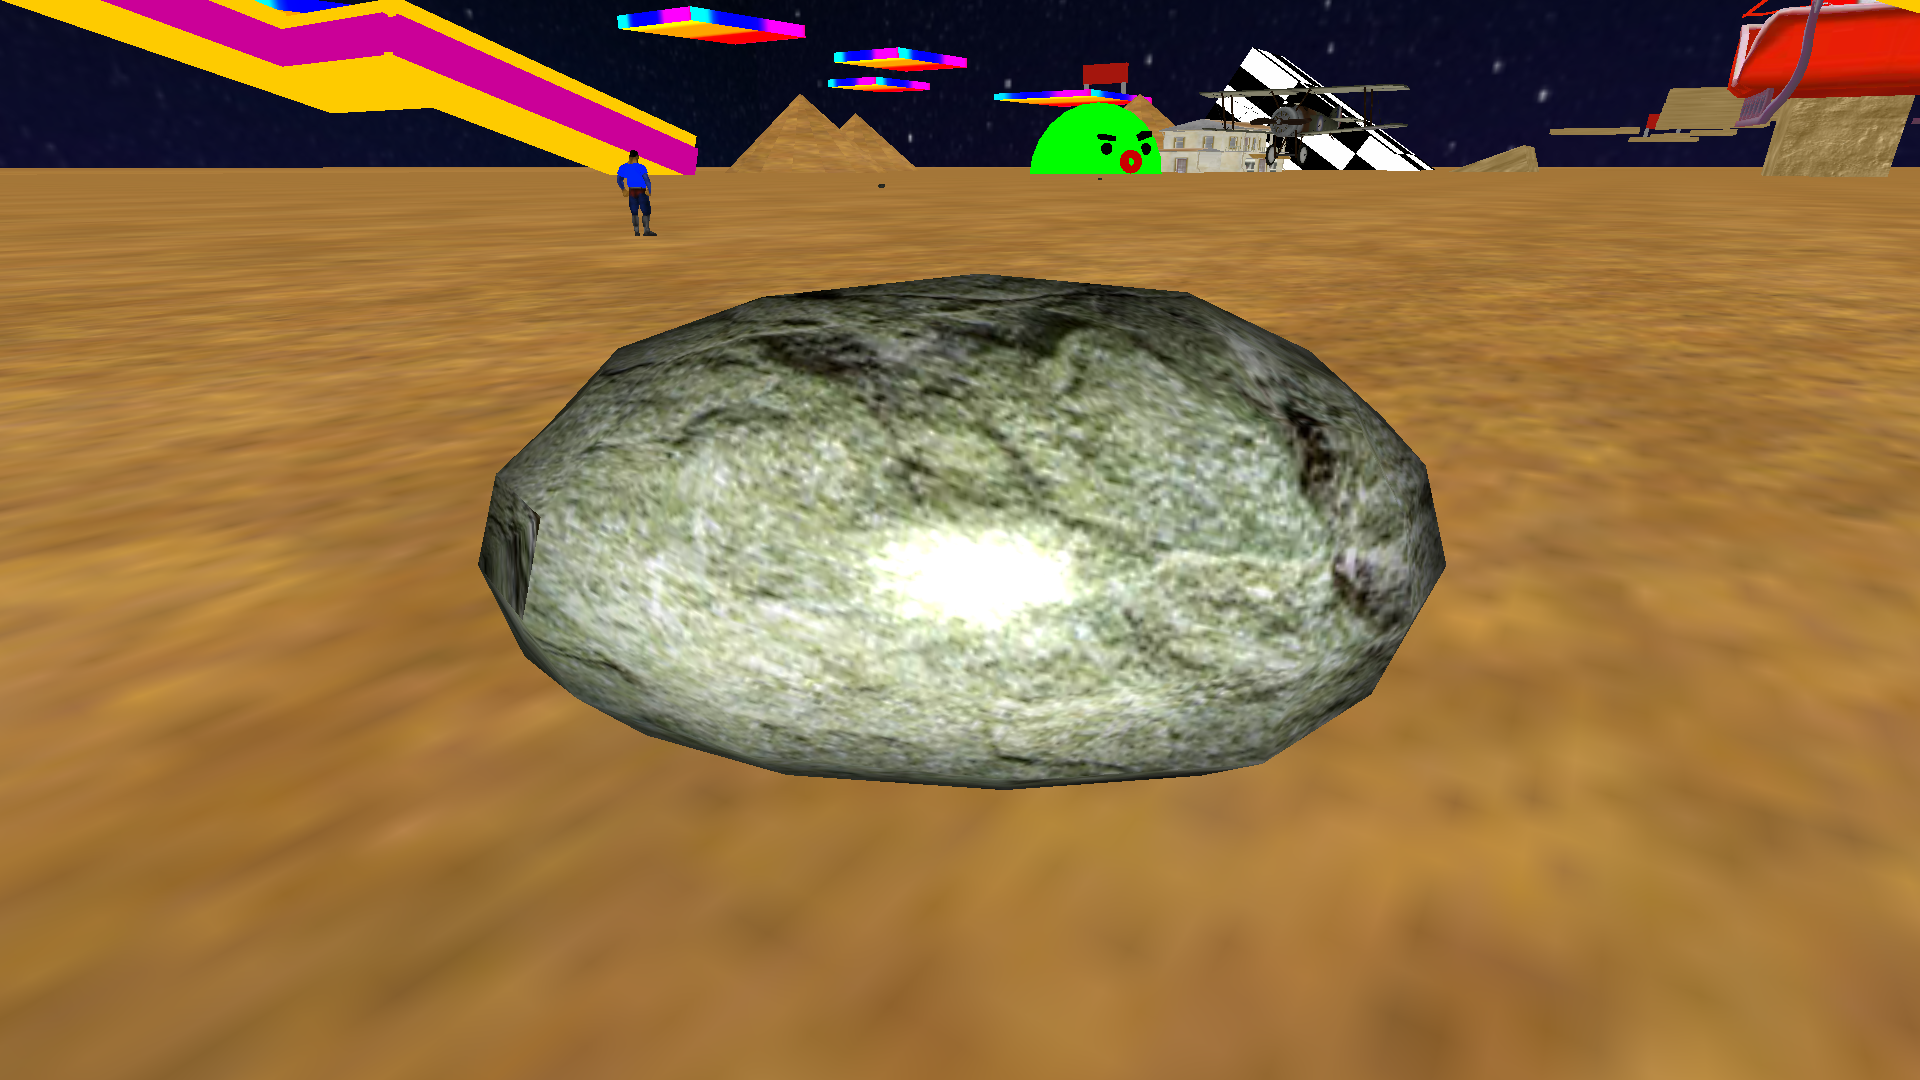 Stone simulator. Симулятор камня RTX. Симулятор камня 2014. Симулятор камня r34. Симулятор булыжника.